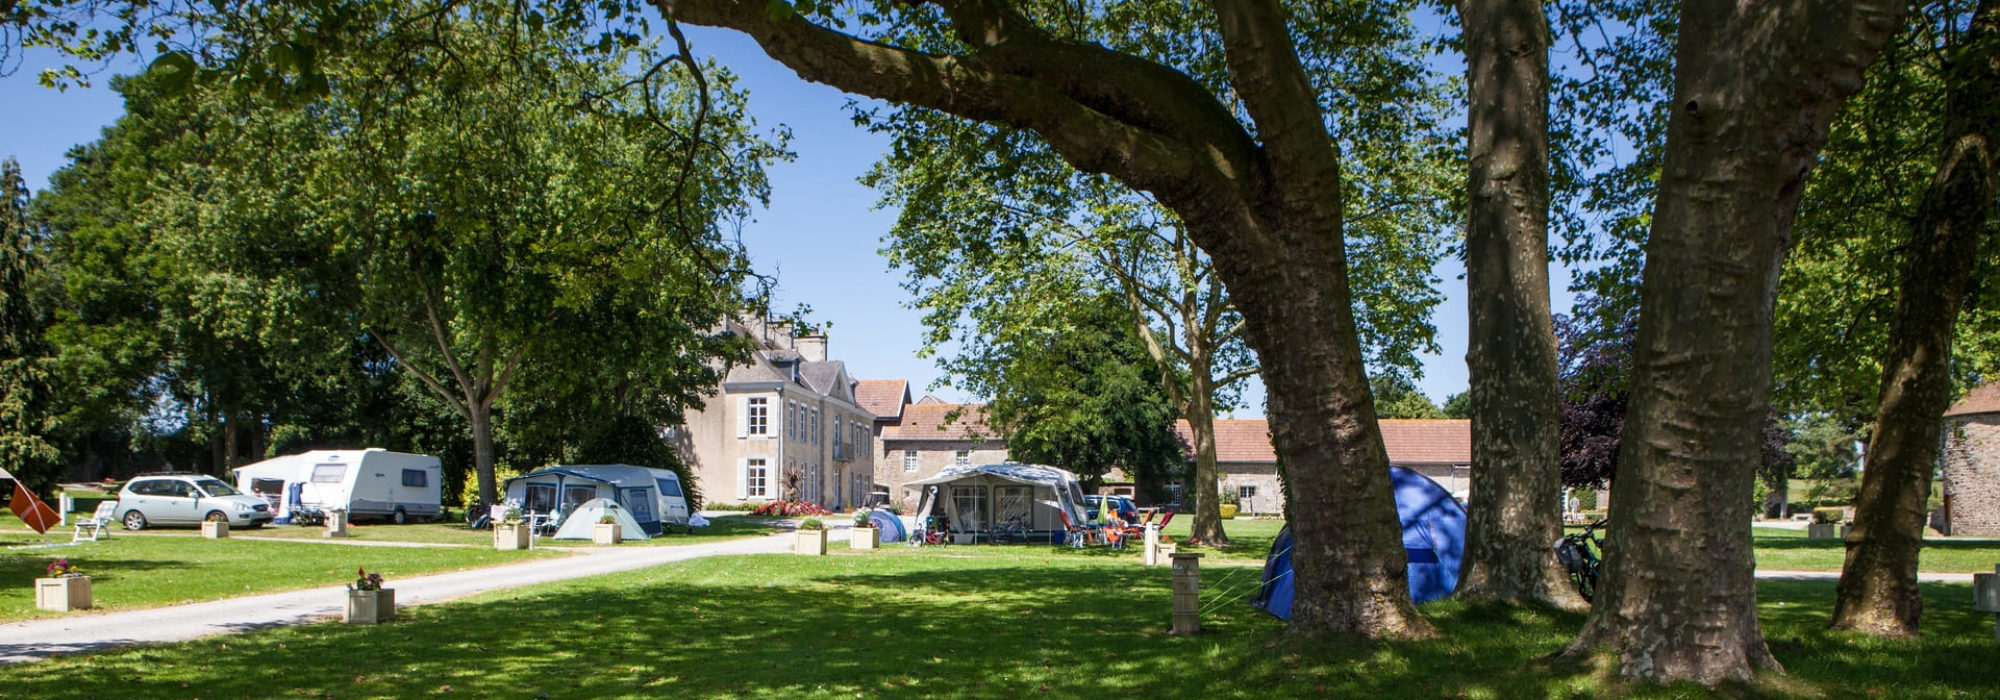 Zelten in dem Schlosspark